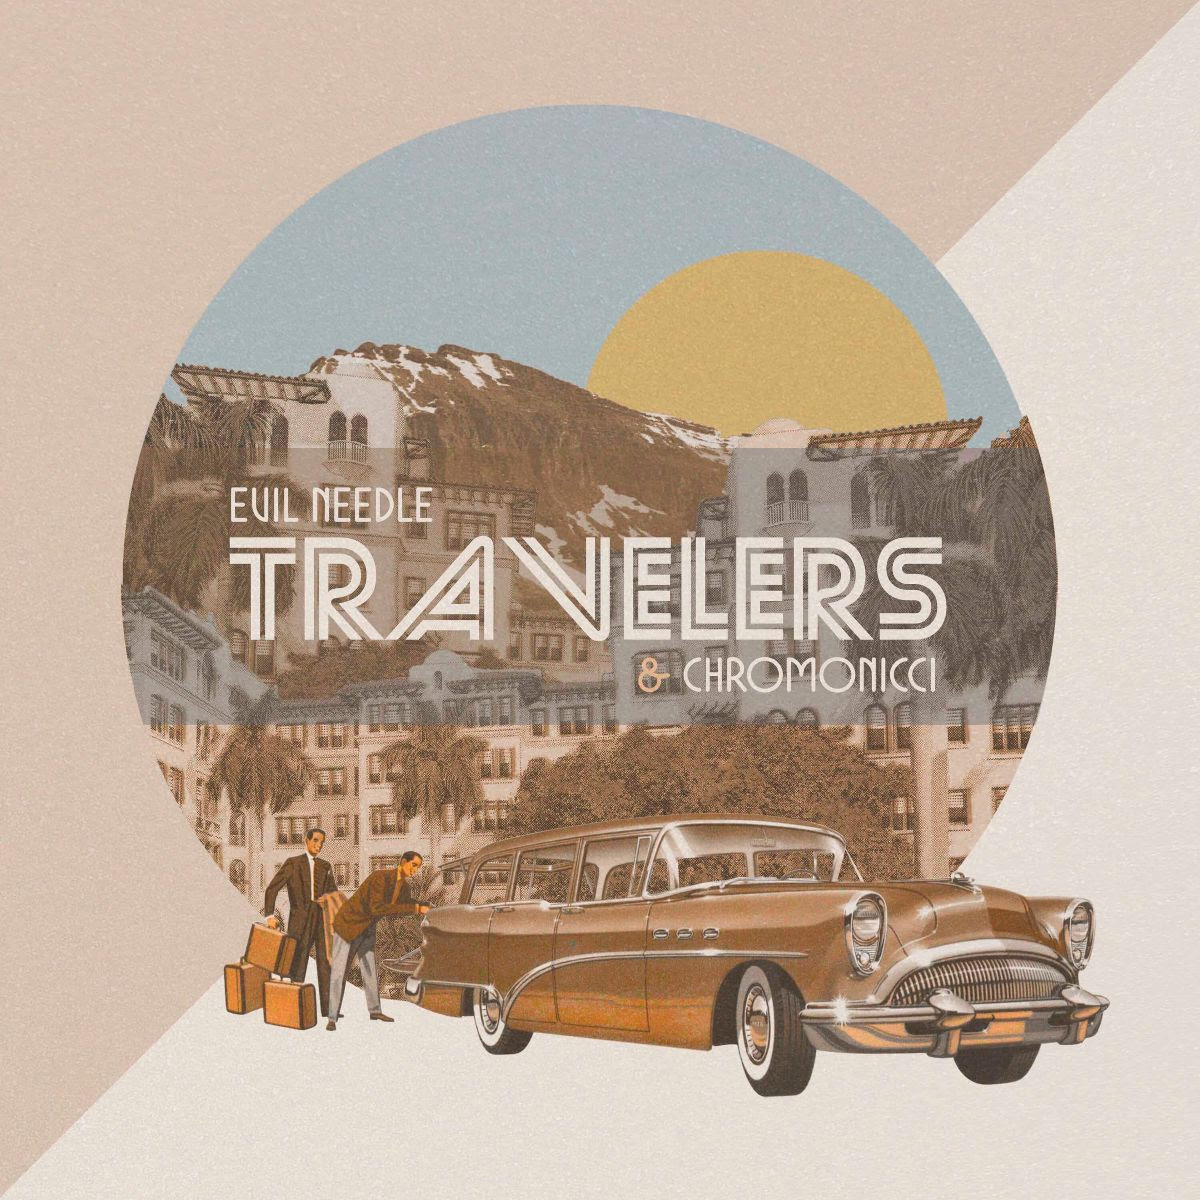 Evil Needle & Chromonicci teamed up for "Travellers" EP